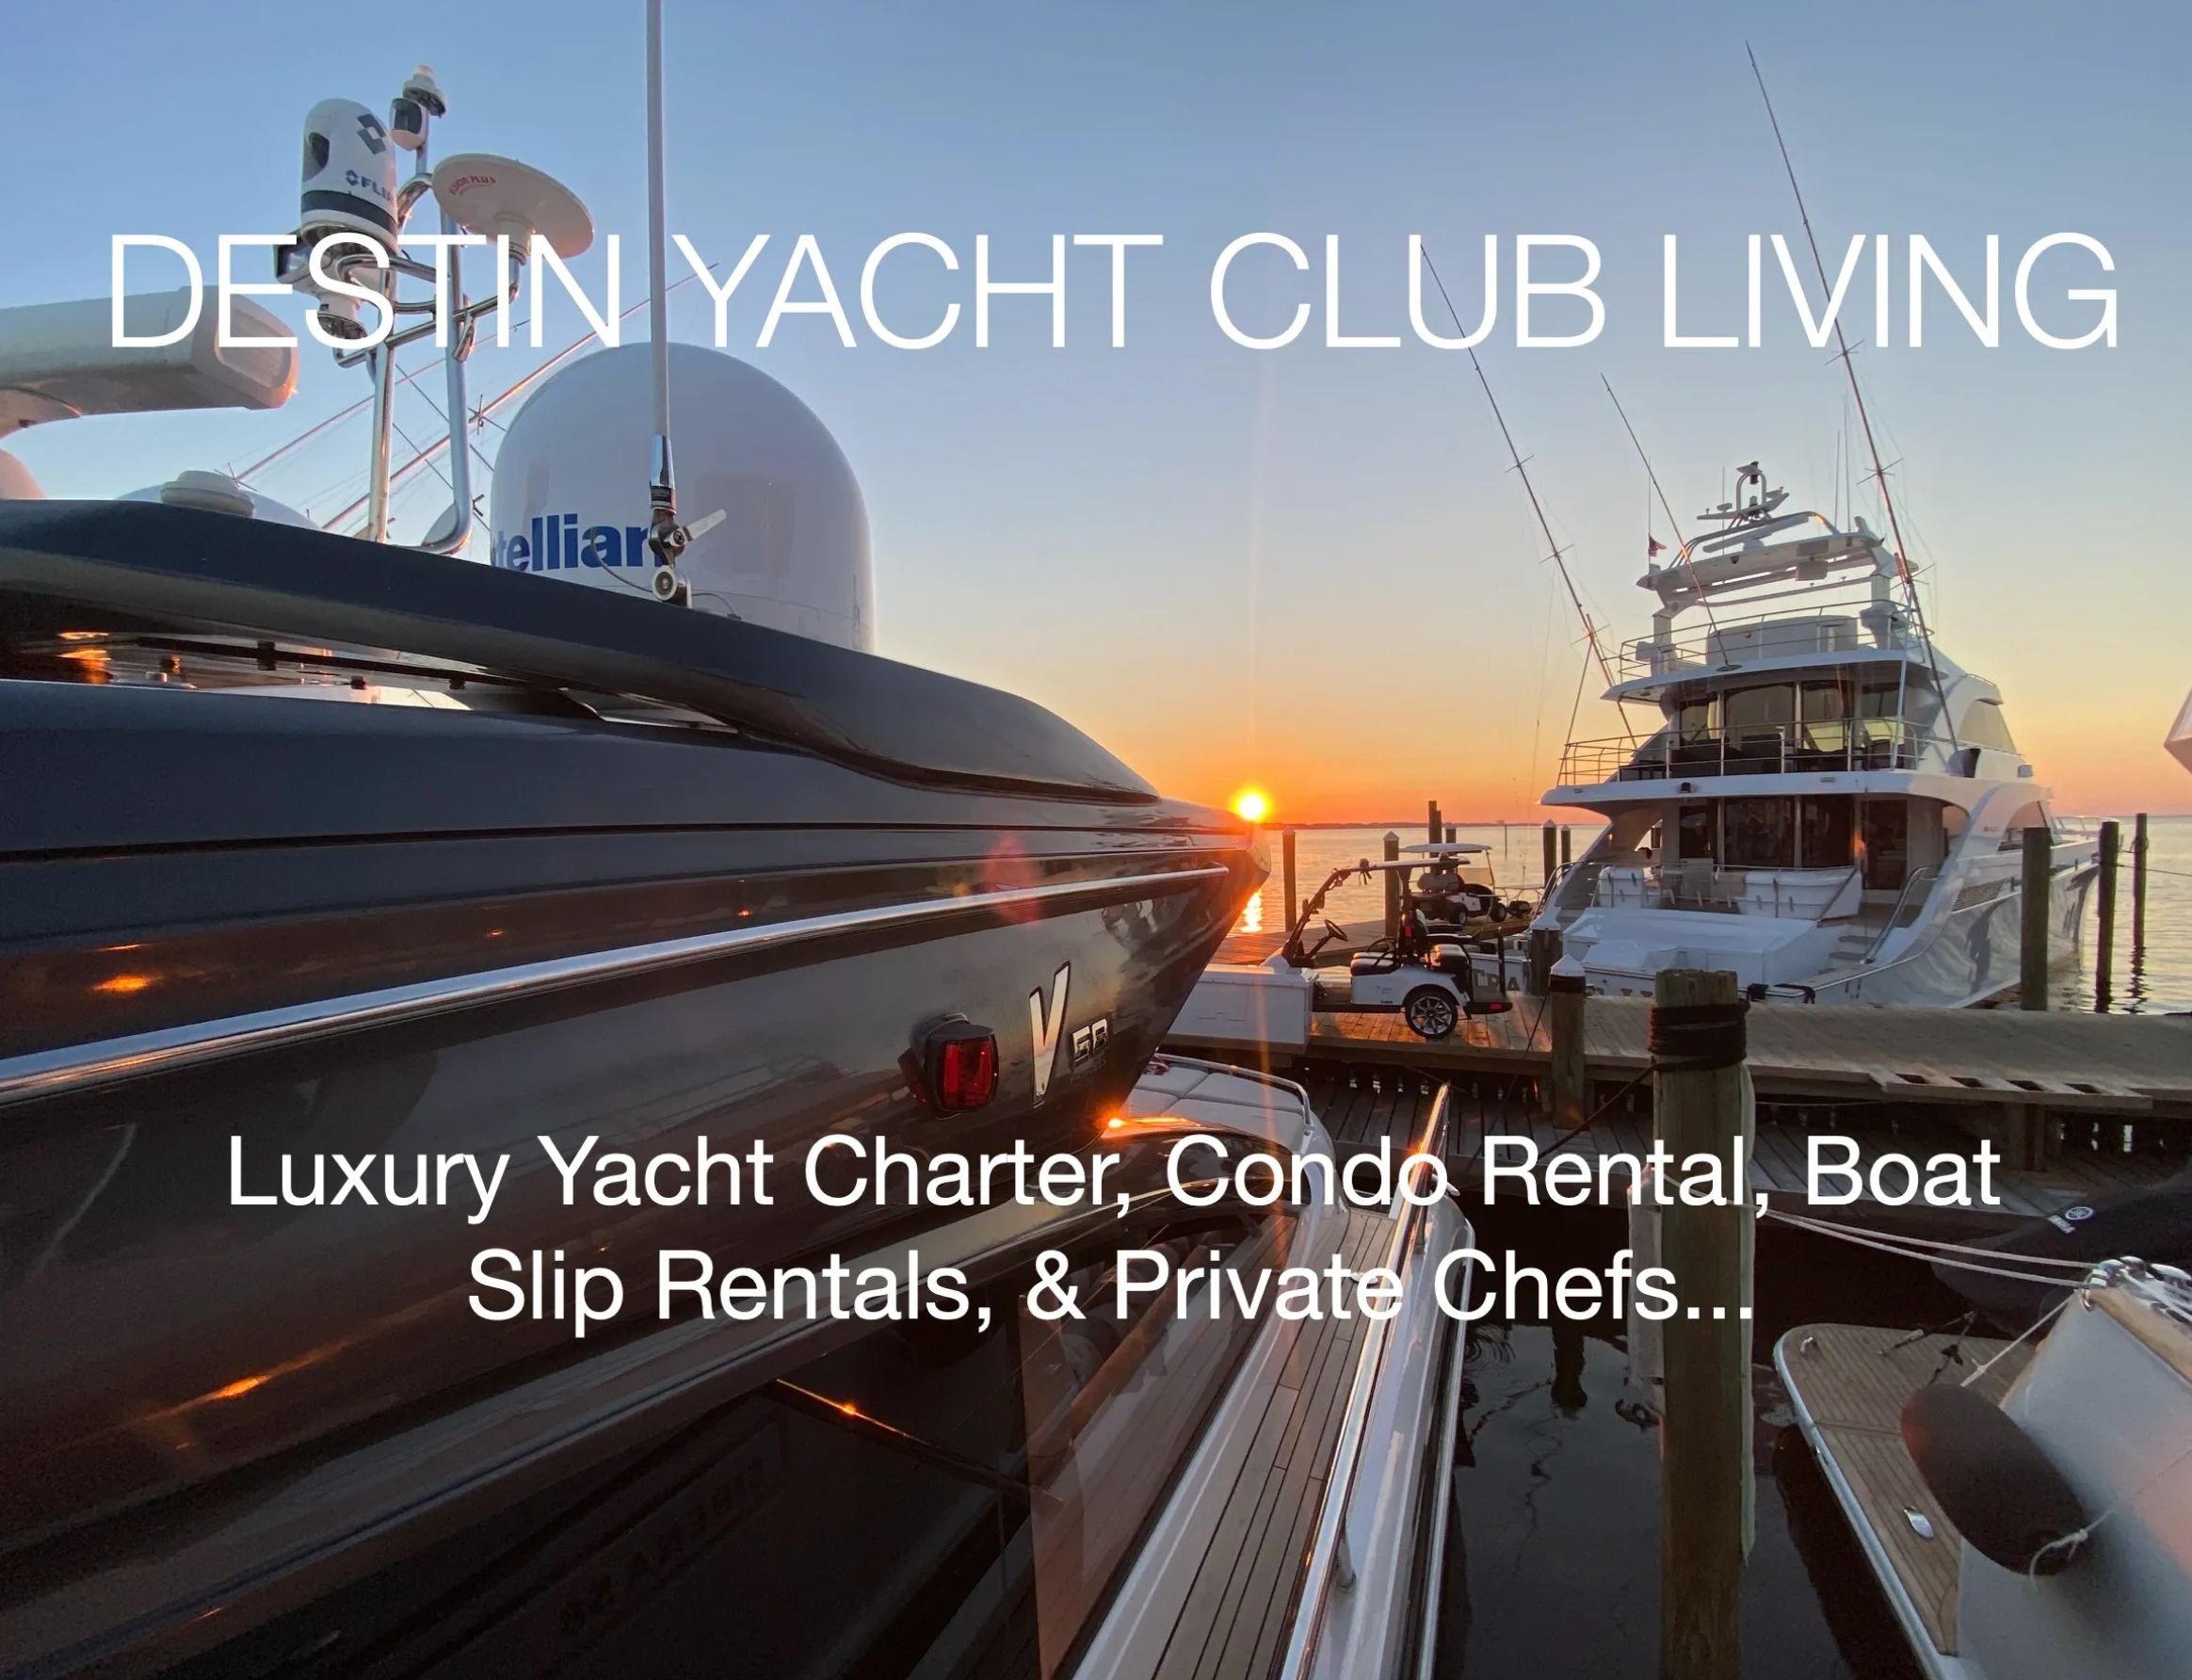 waterview yacht club destin fl